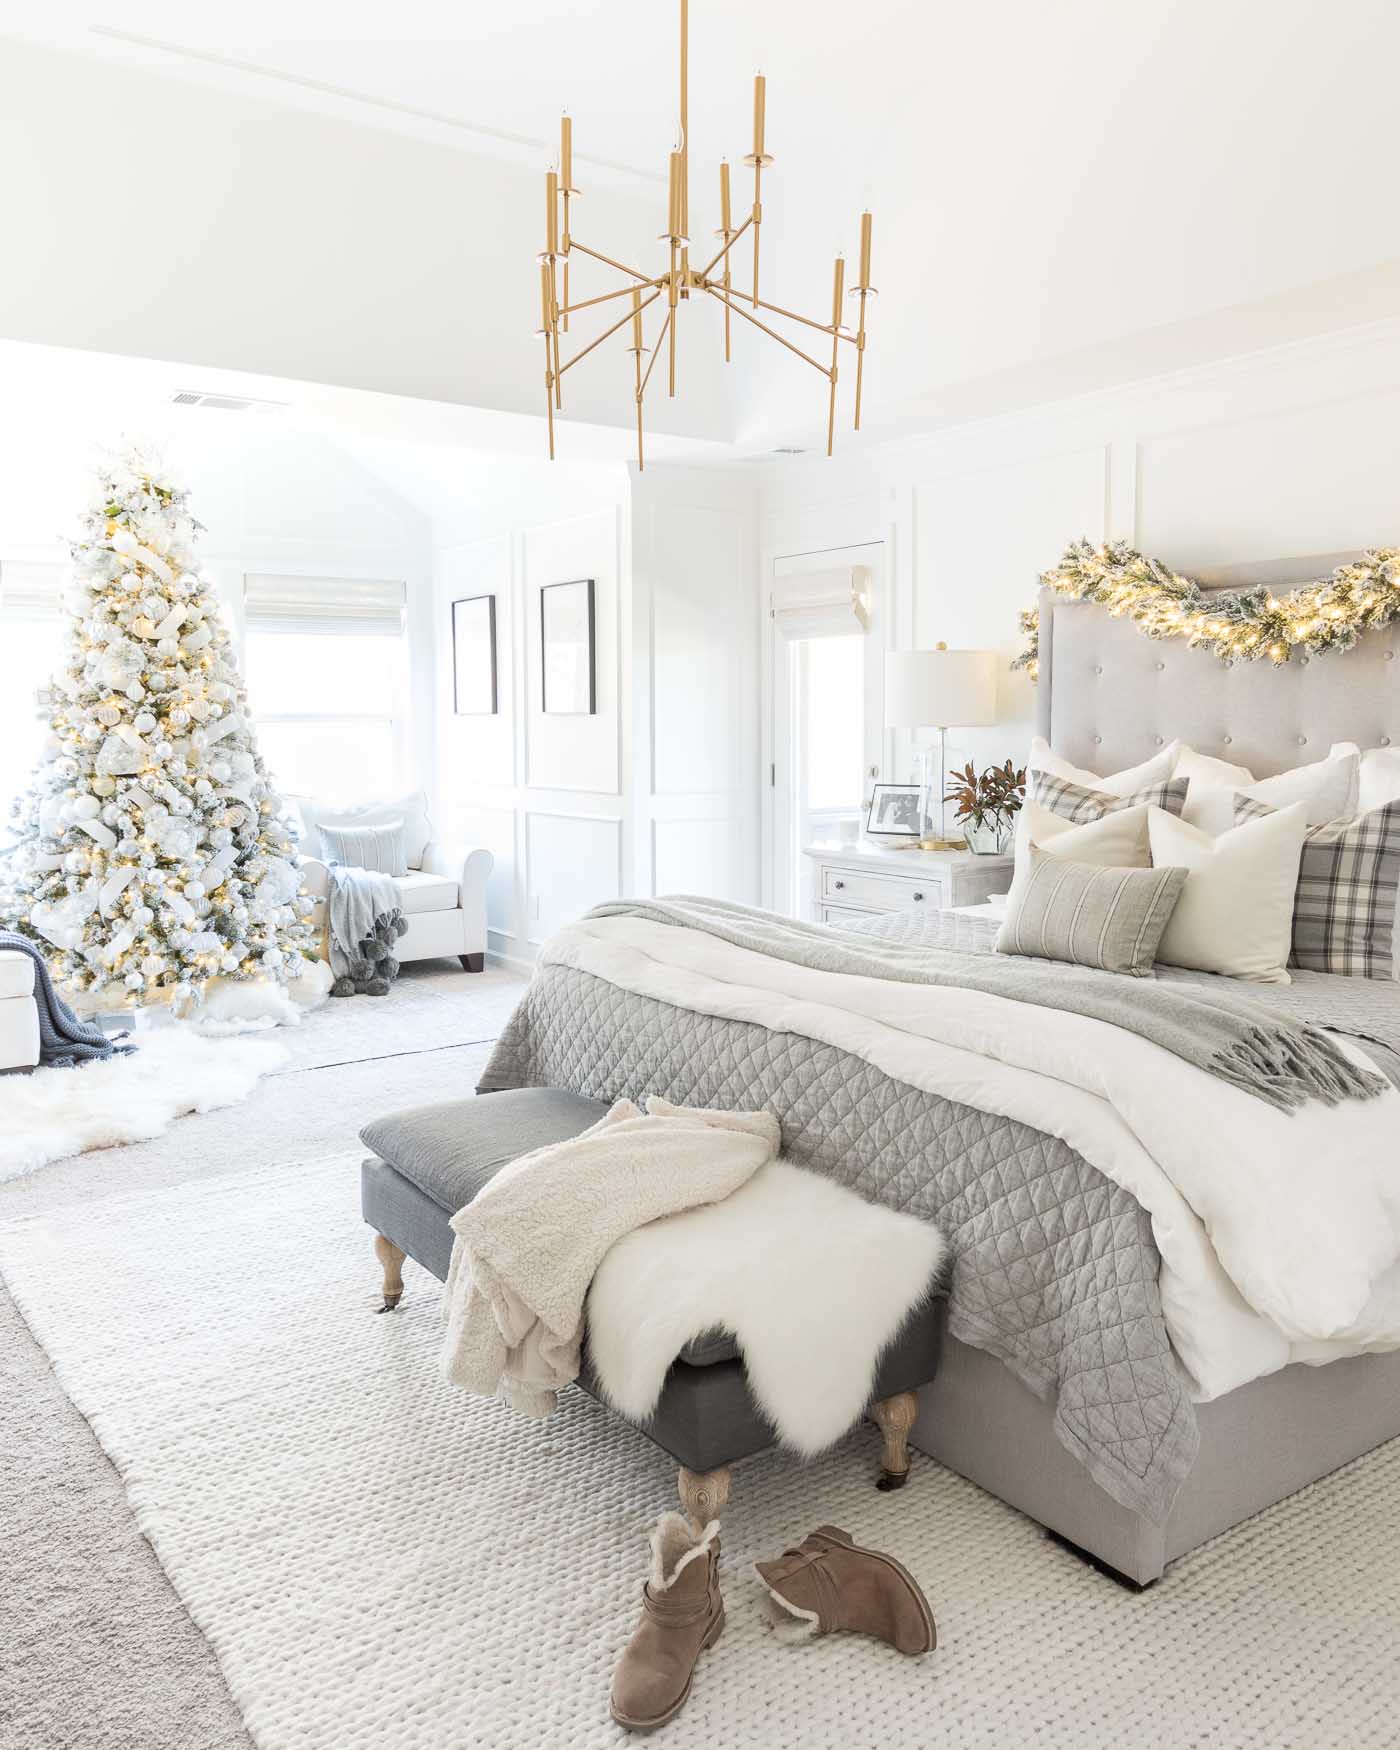 Christmas bedroom decorations and Christmas tree